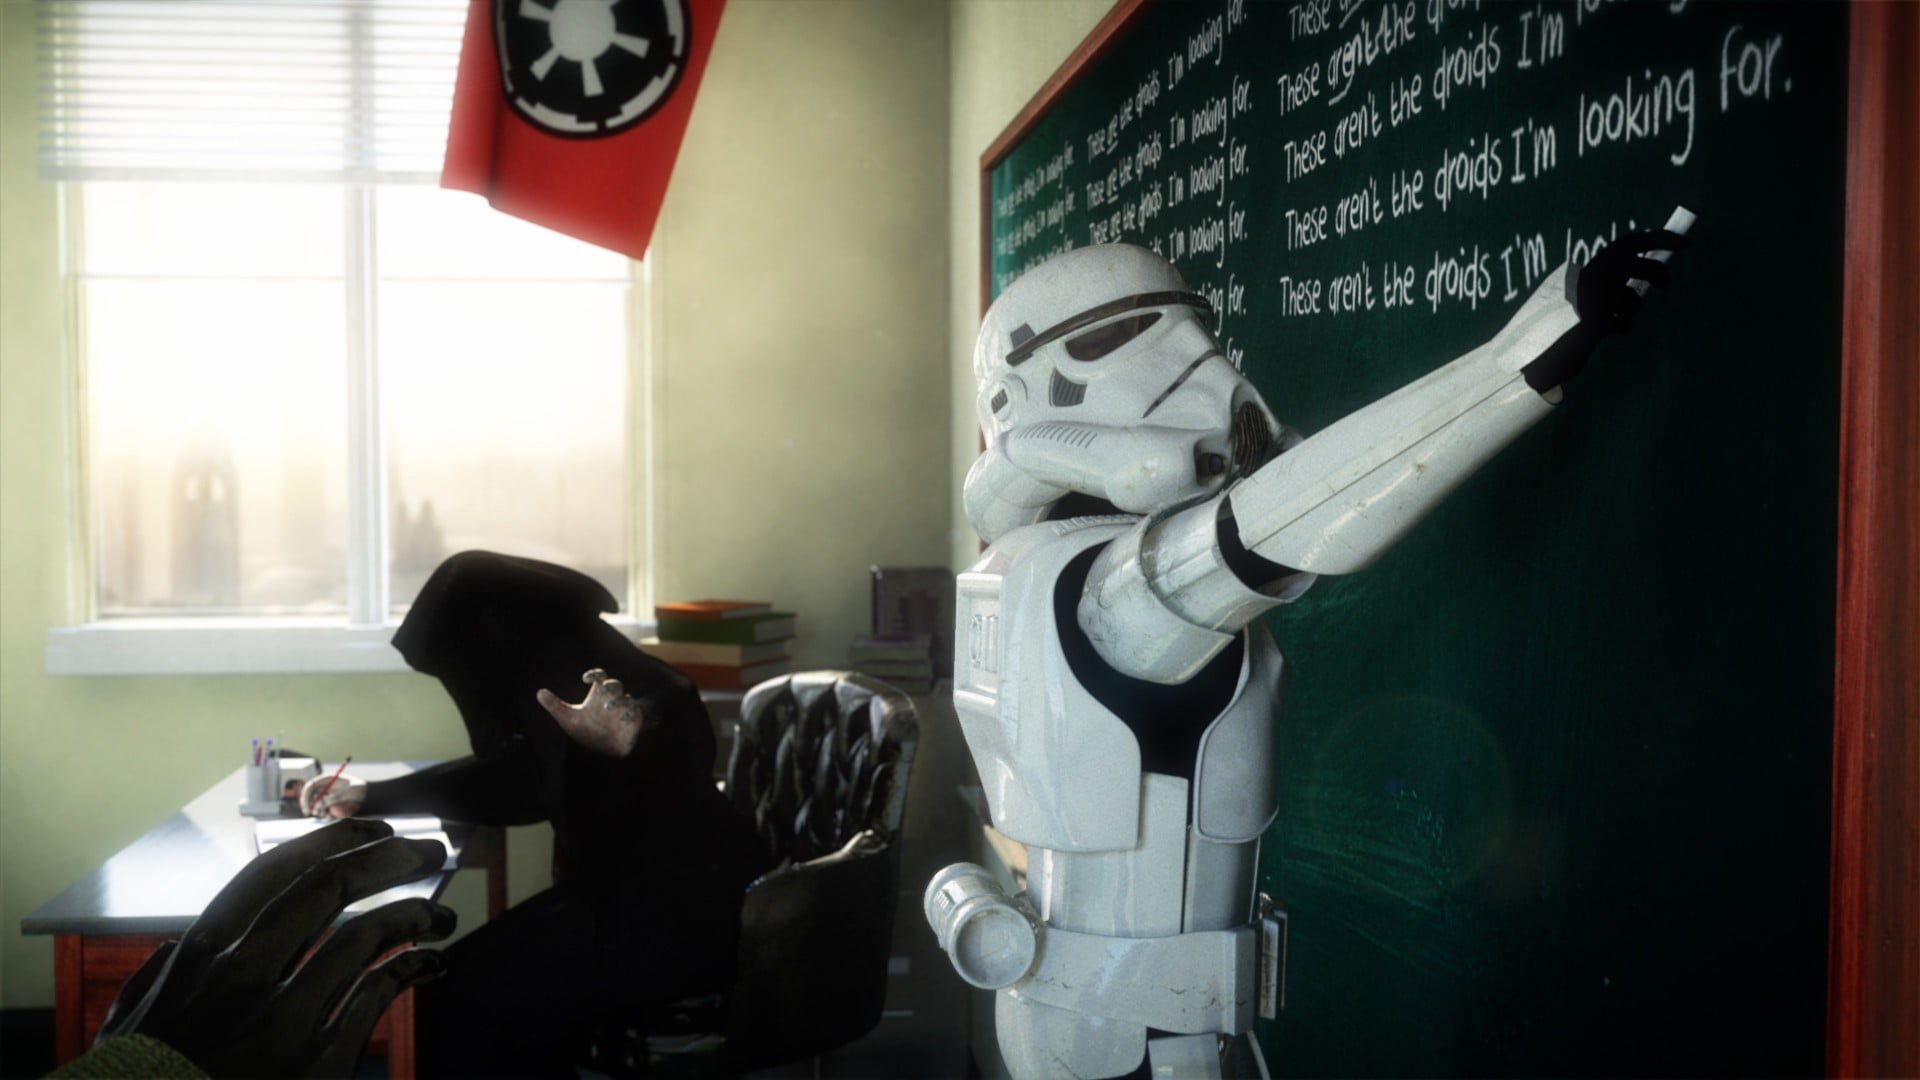 Star Wars Storm Trooper, school, window, human representation